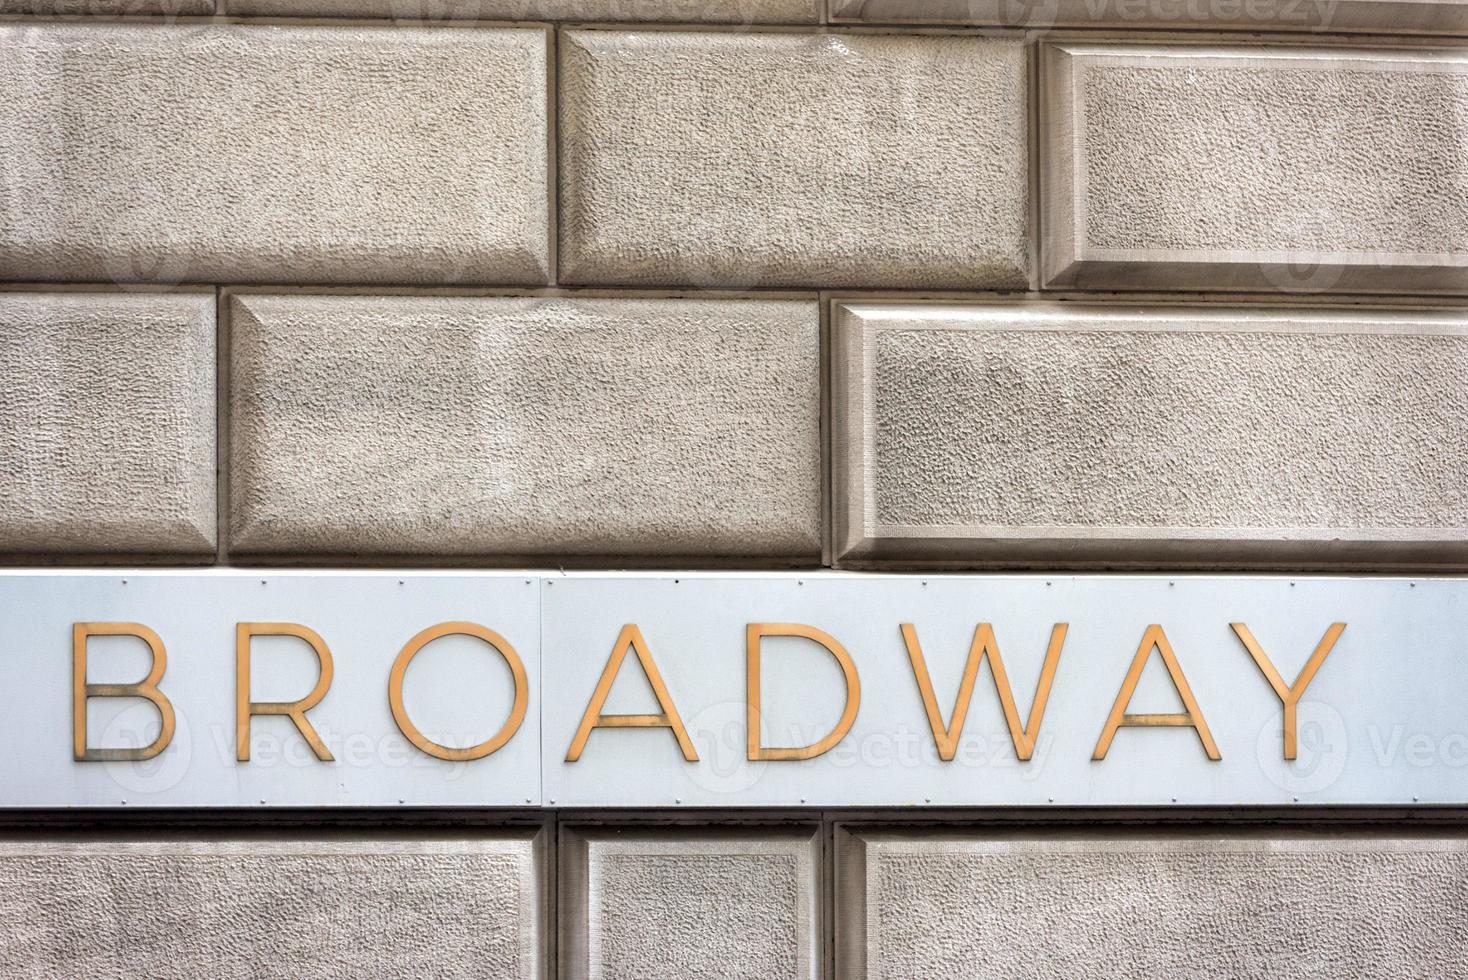 new york street sign Broadway photo